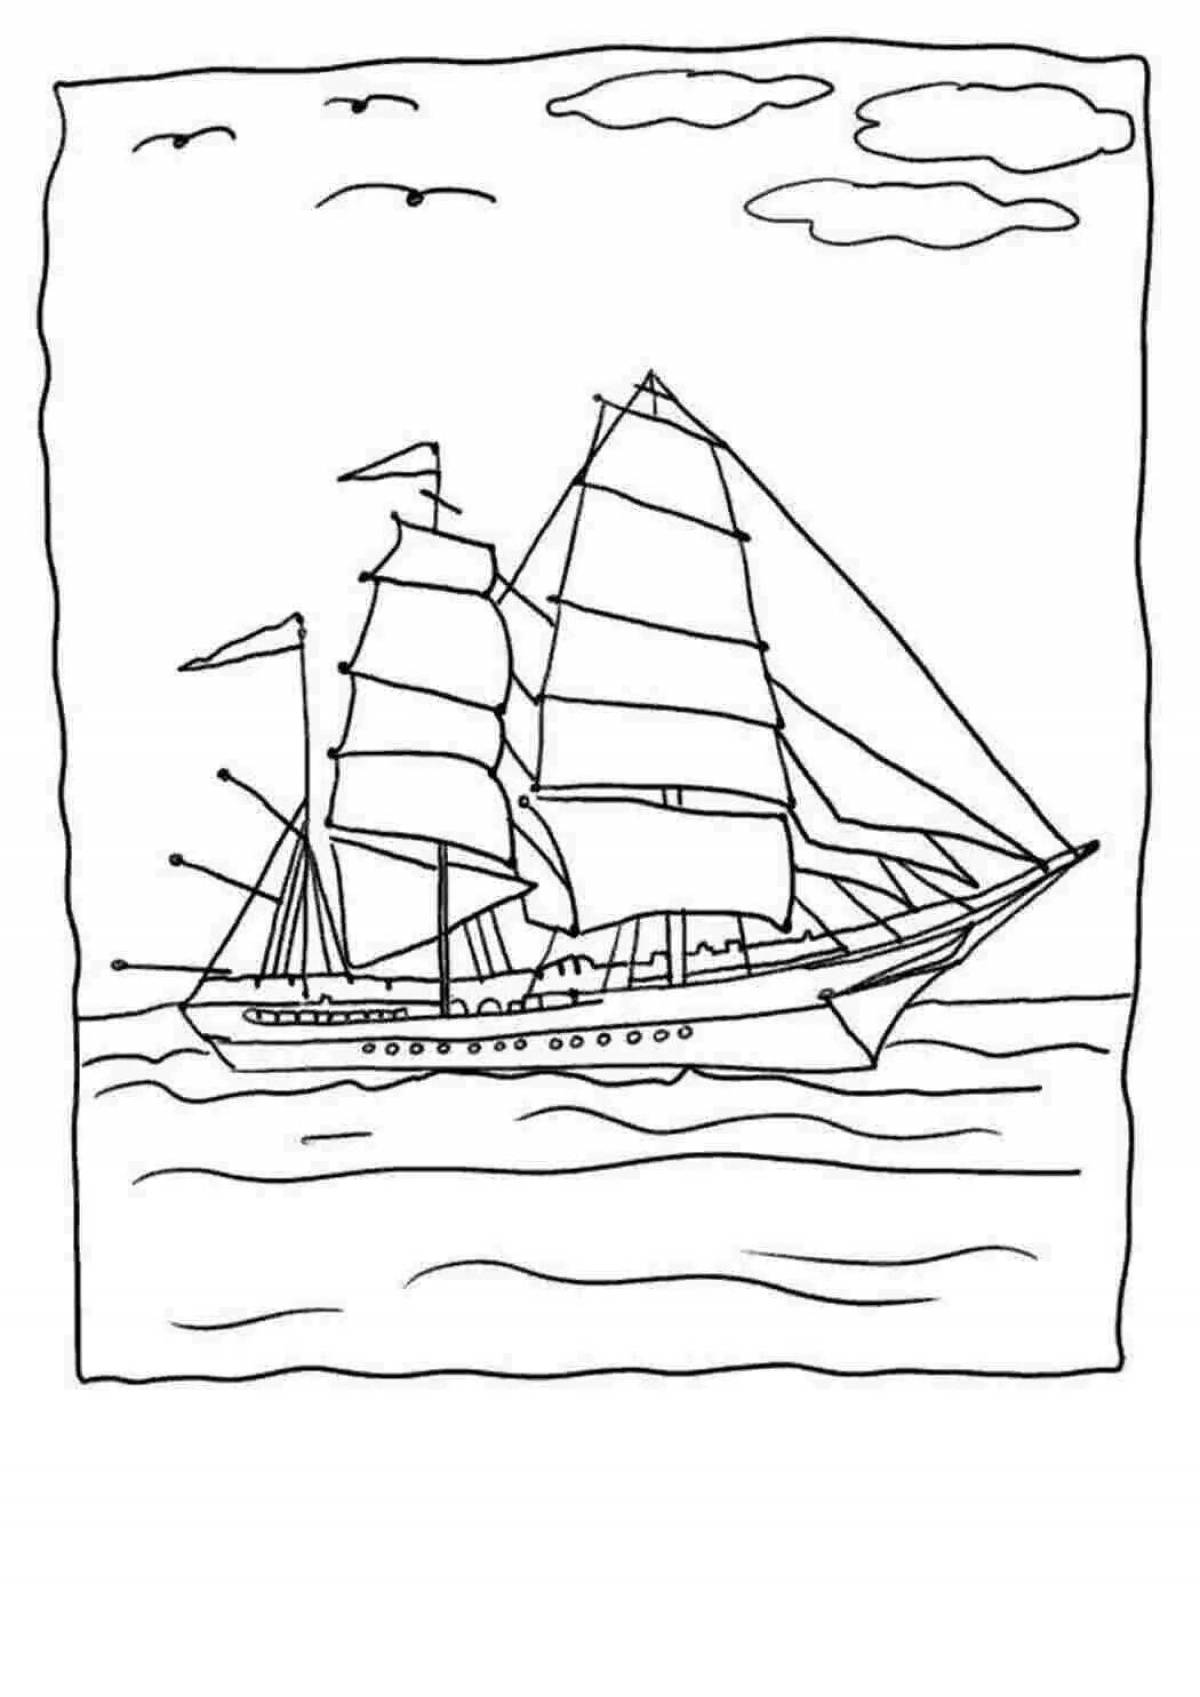 Impressive scarlet sails grade 6 coloring book